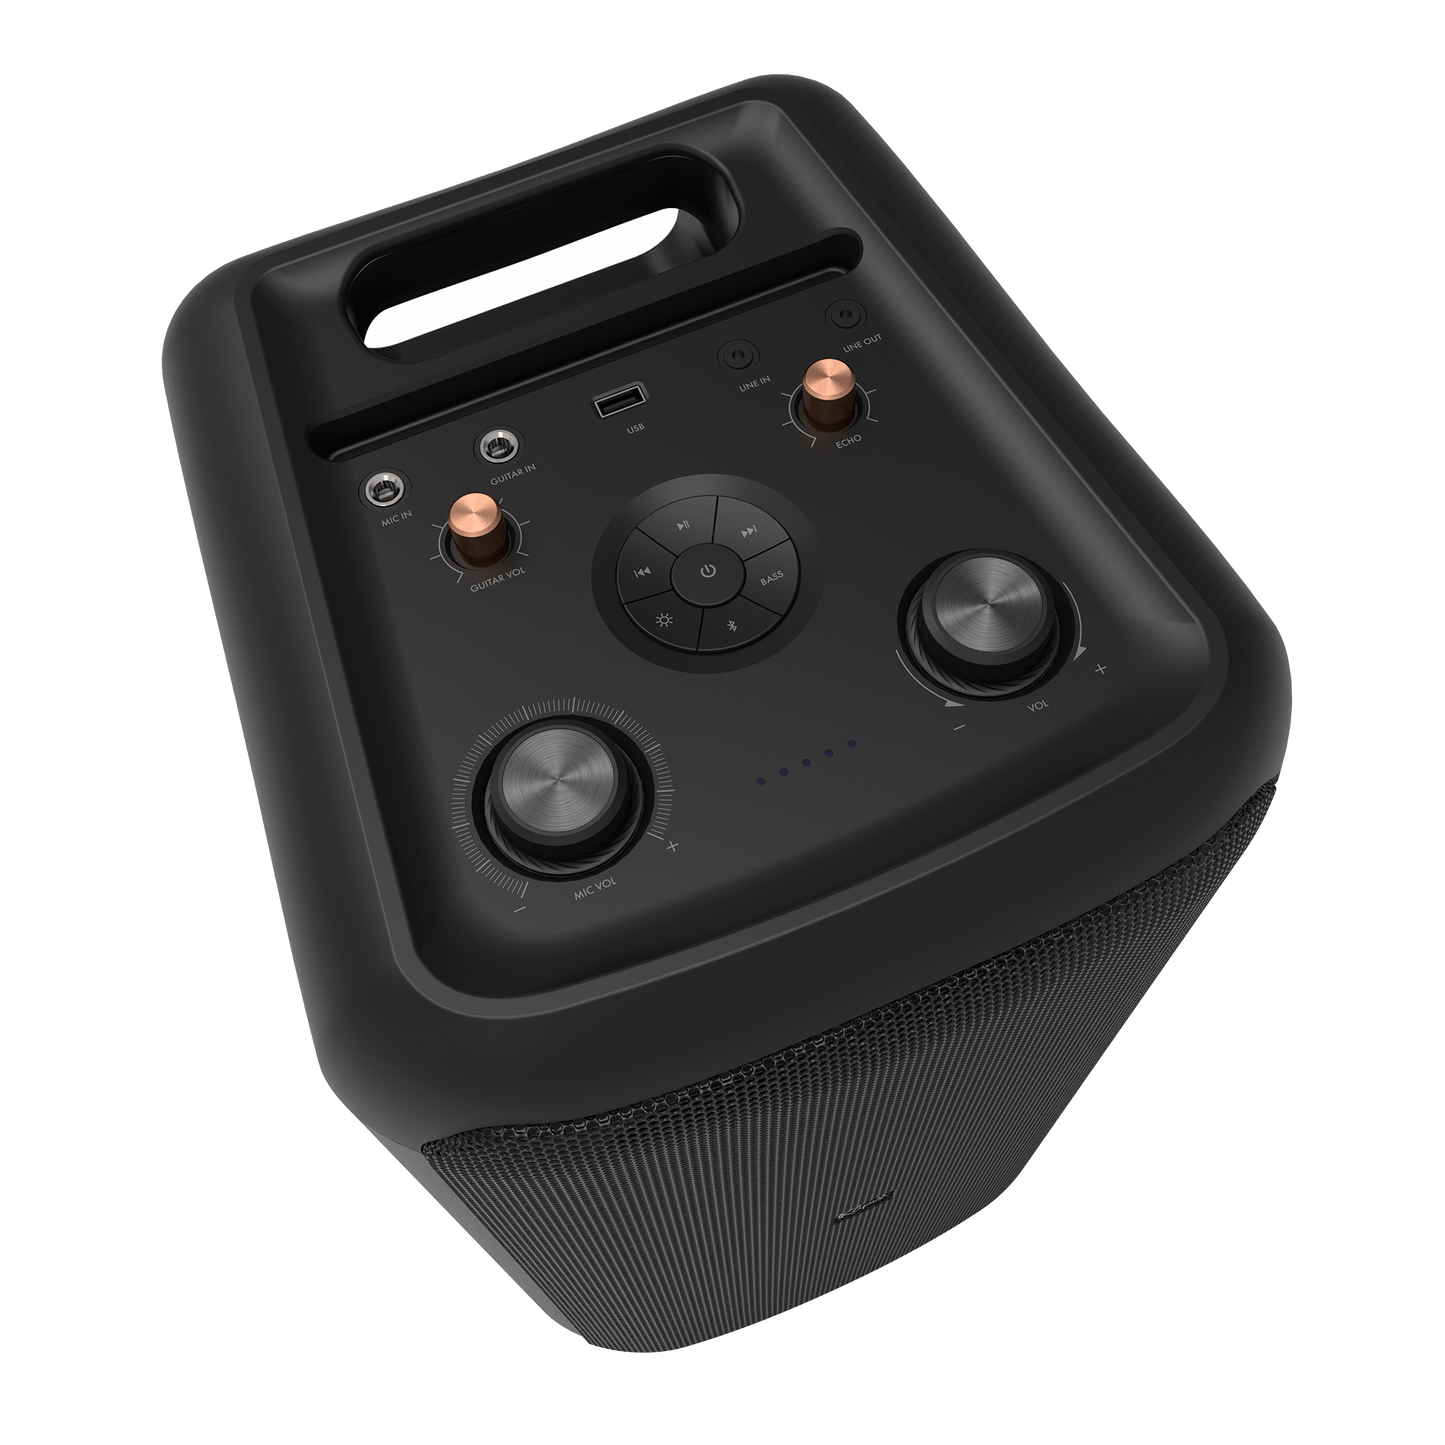 Klipsch GIG XXL Portable Wireless Party Speaker-Active HI FI speakers-Klipsch-PremiumHIFI